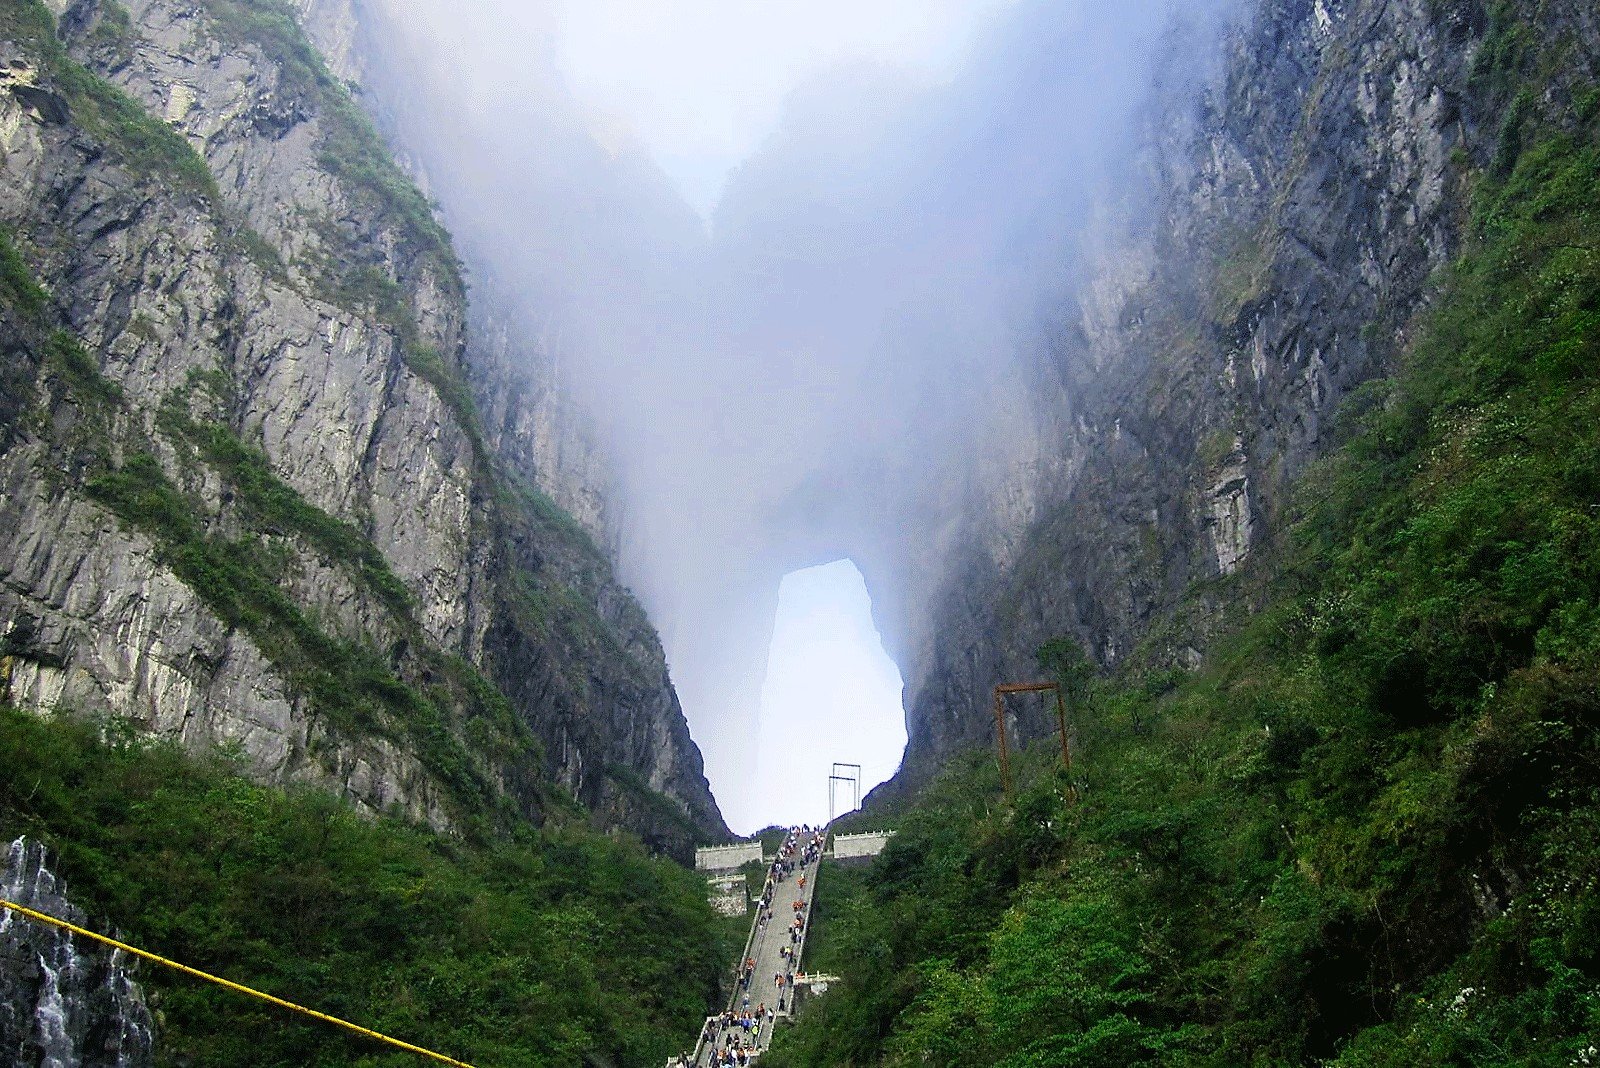 How to see the Heaven's Gate in Zhangjiajie